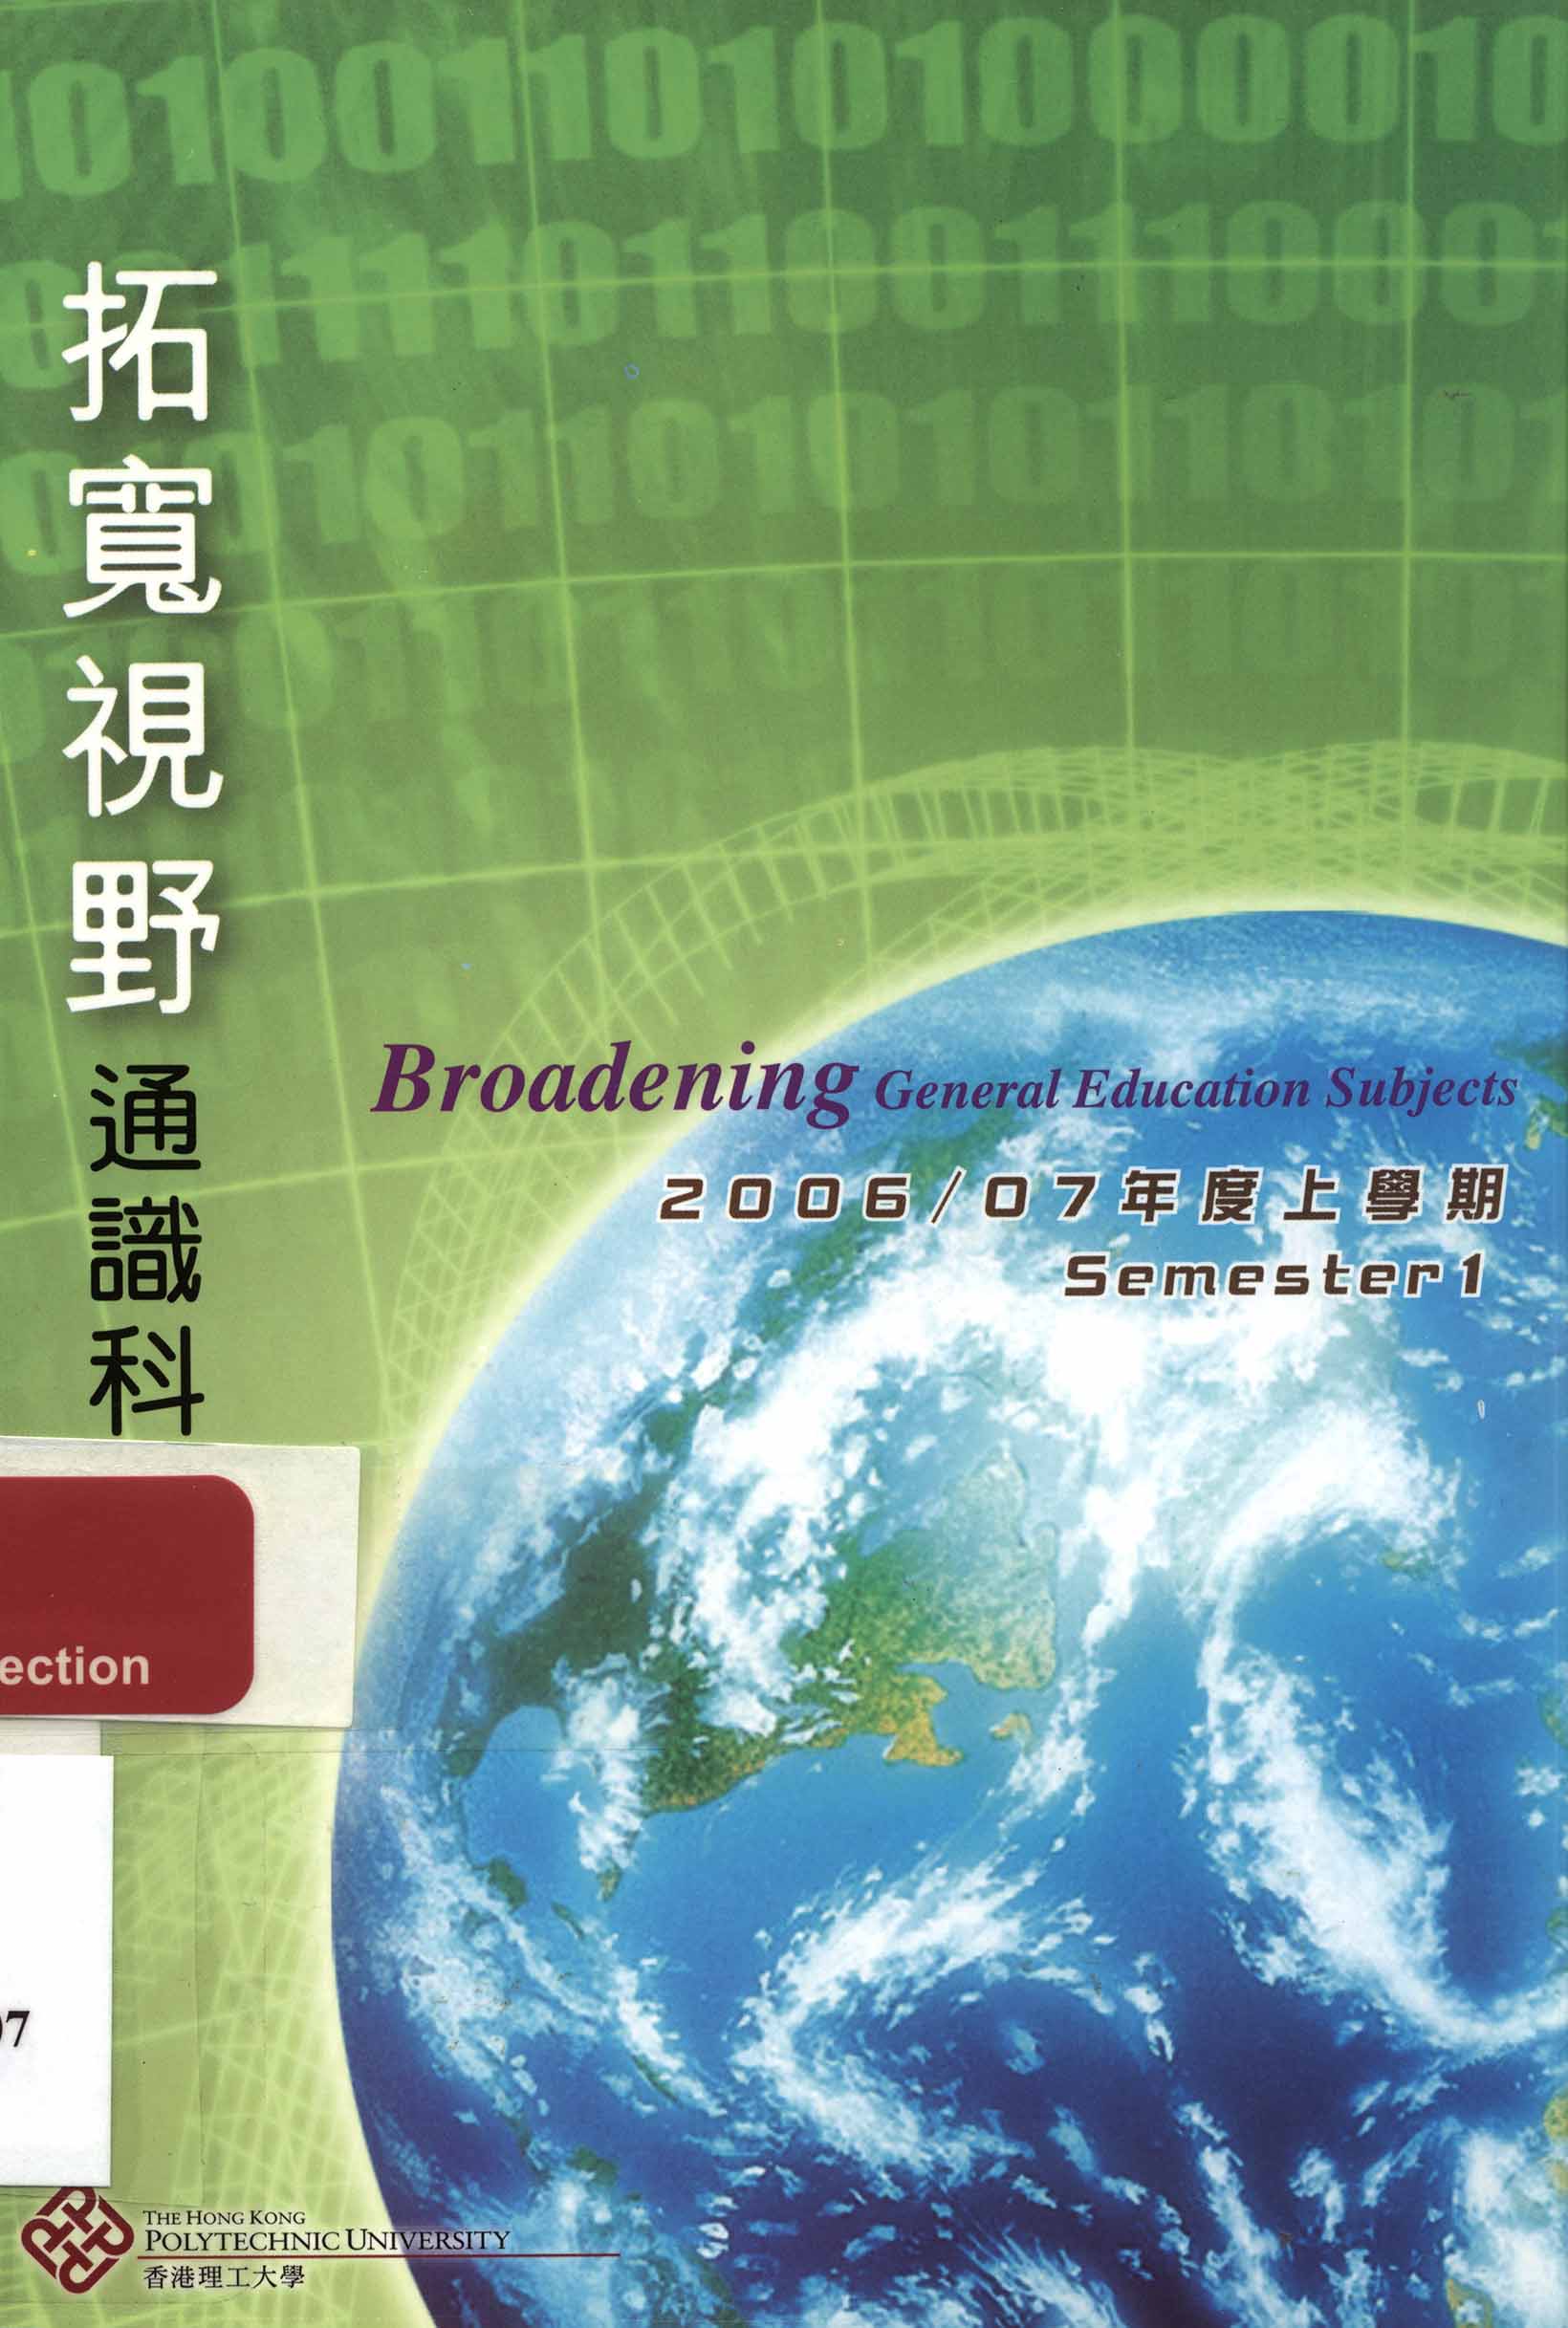 "Broadening" General Education subjects [Semester 1 of 2006/07]